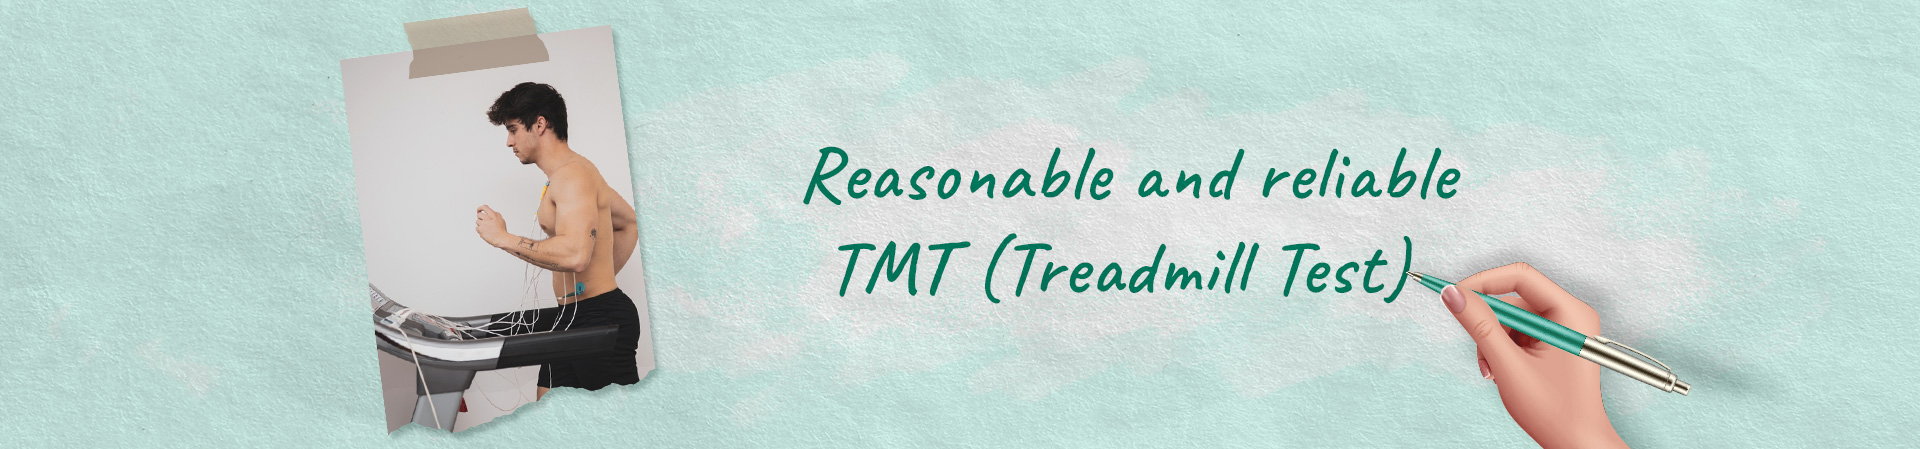 TMT (Treadmill Test): Price, Normal Range, and Procedure in AccuHealth Kolkata